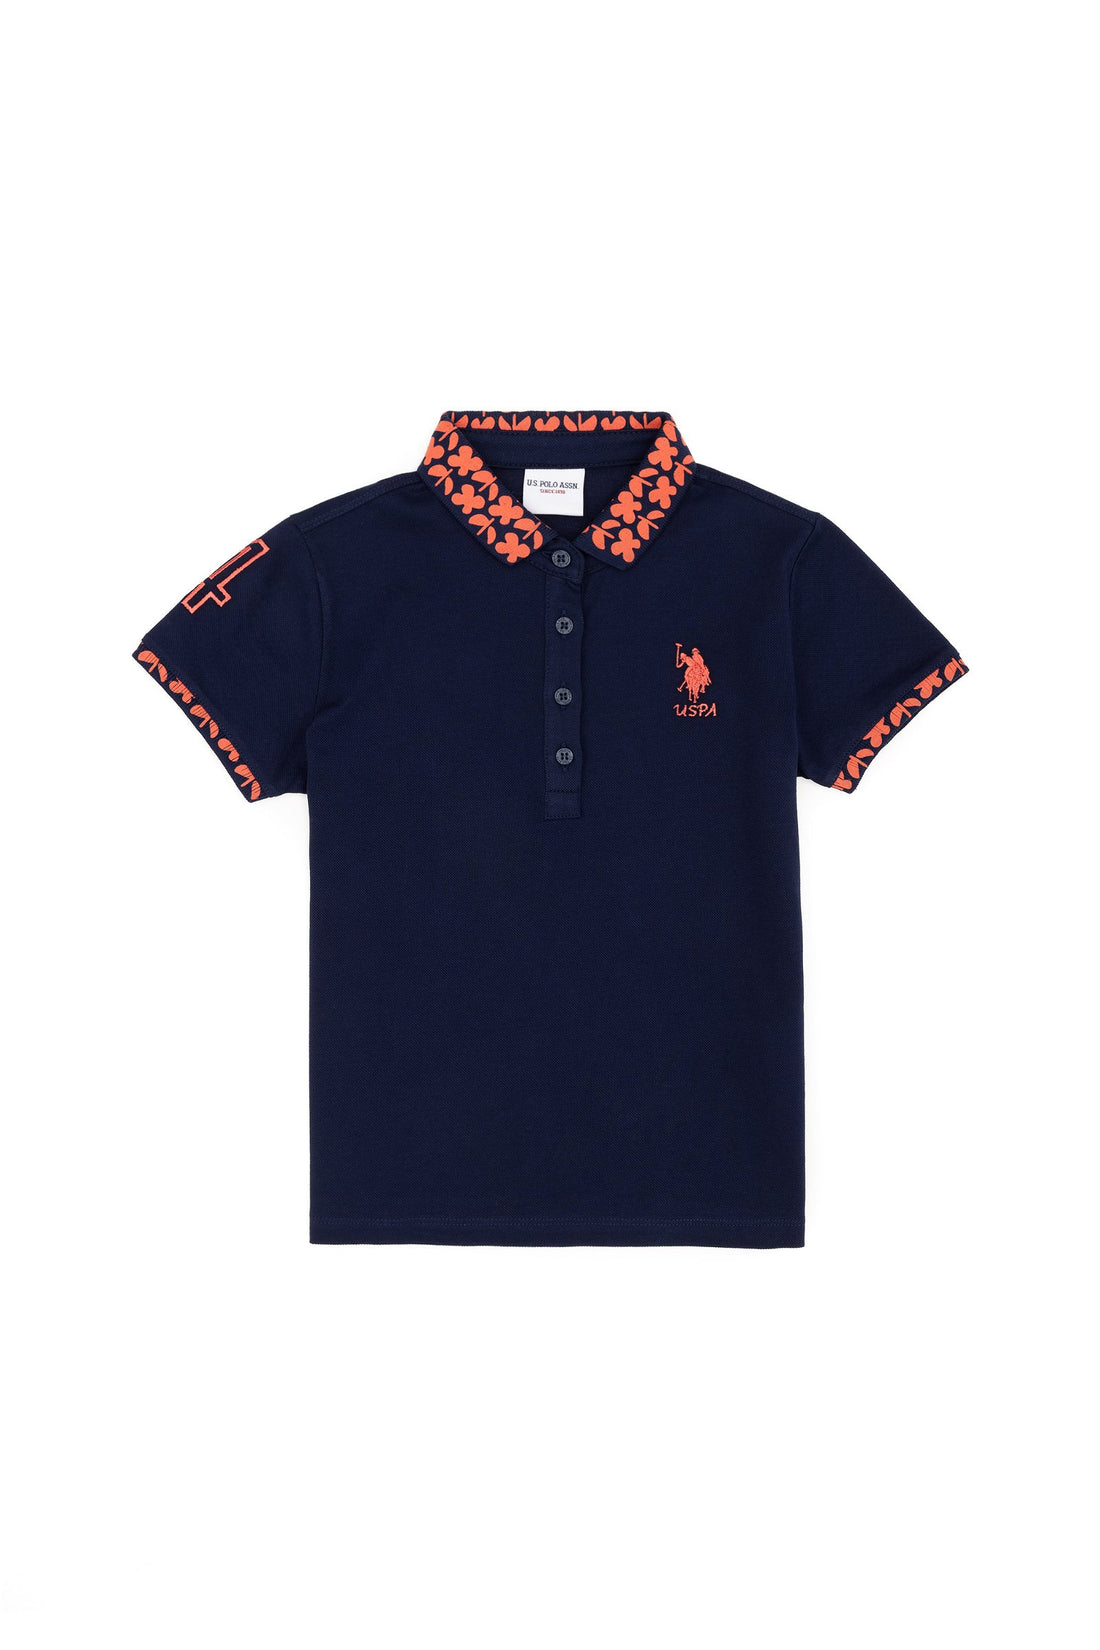 Polo Shirt With Design_G084SZ0110 1834405_VR033_01